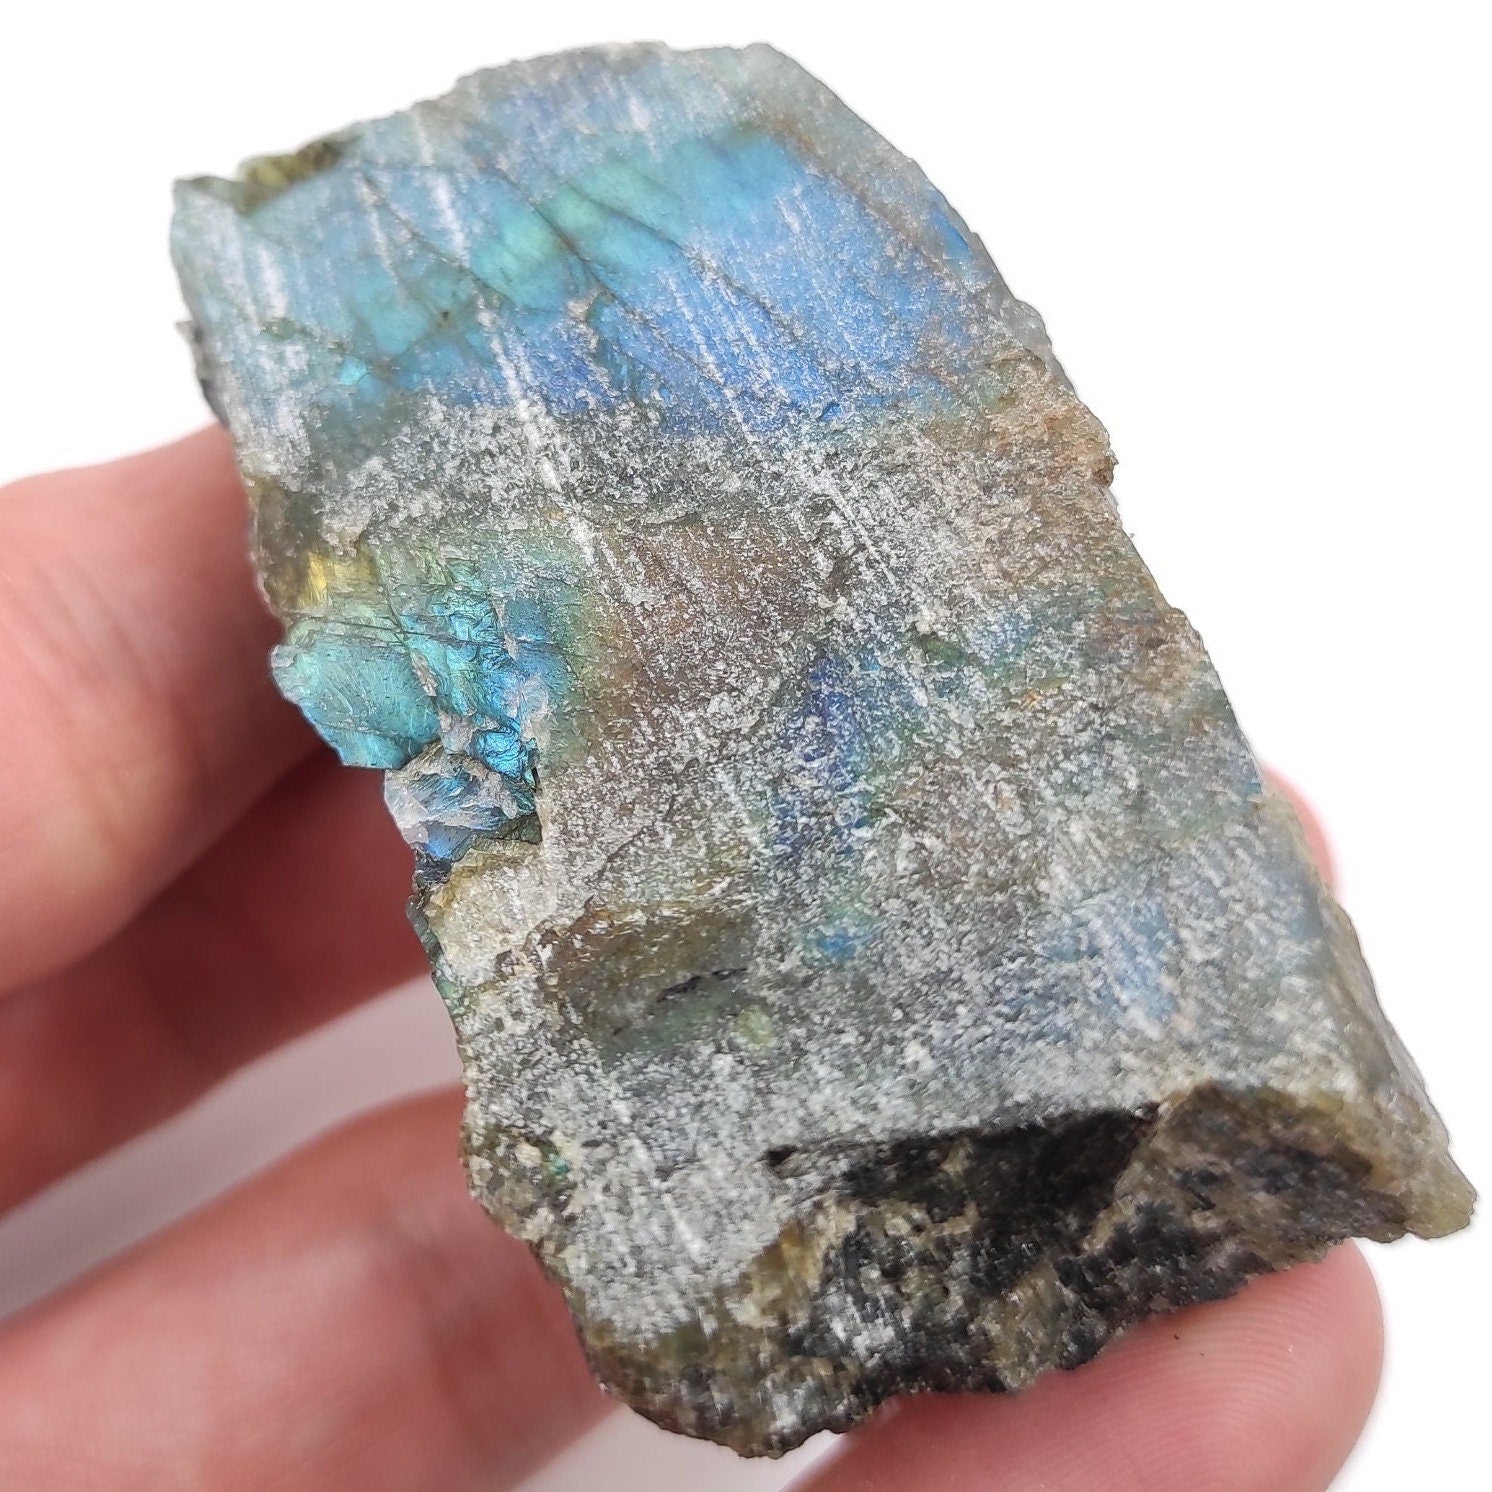 103g Labradorite Crystal - Flashy Blue Labradorite - Rough Labradorite Stone from Madagascar - Natural Labradorite - Raw Crystals